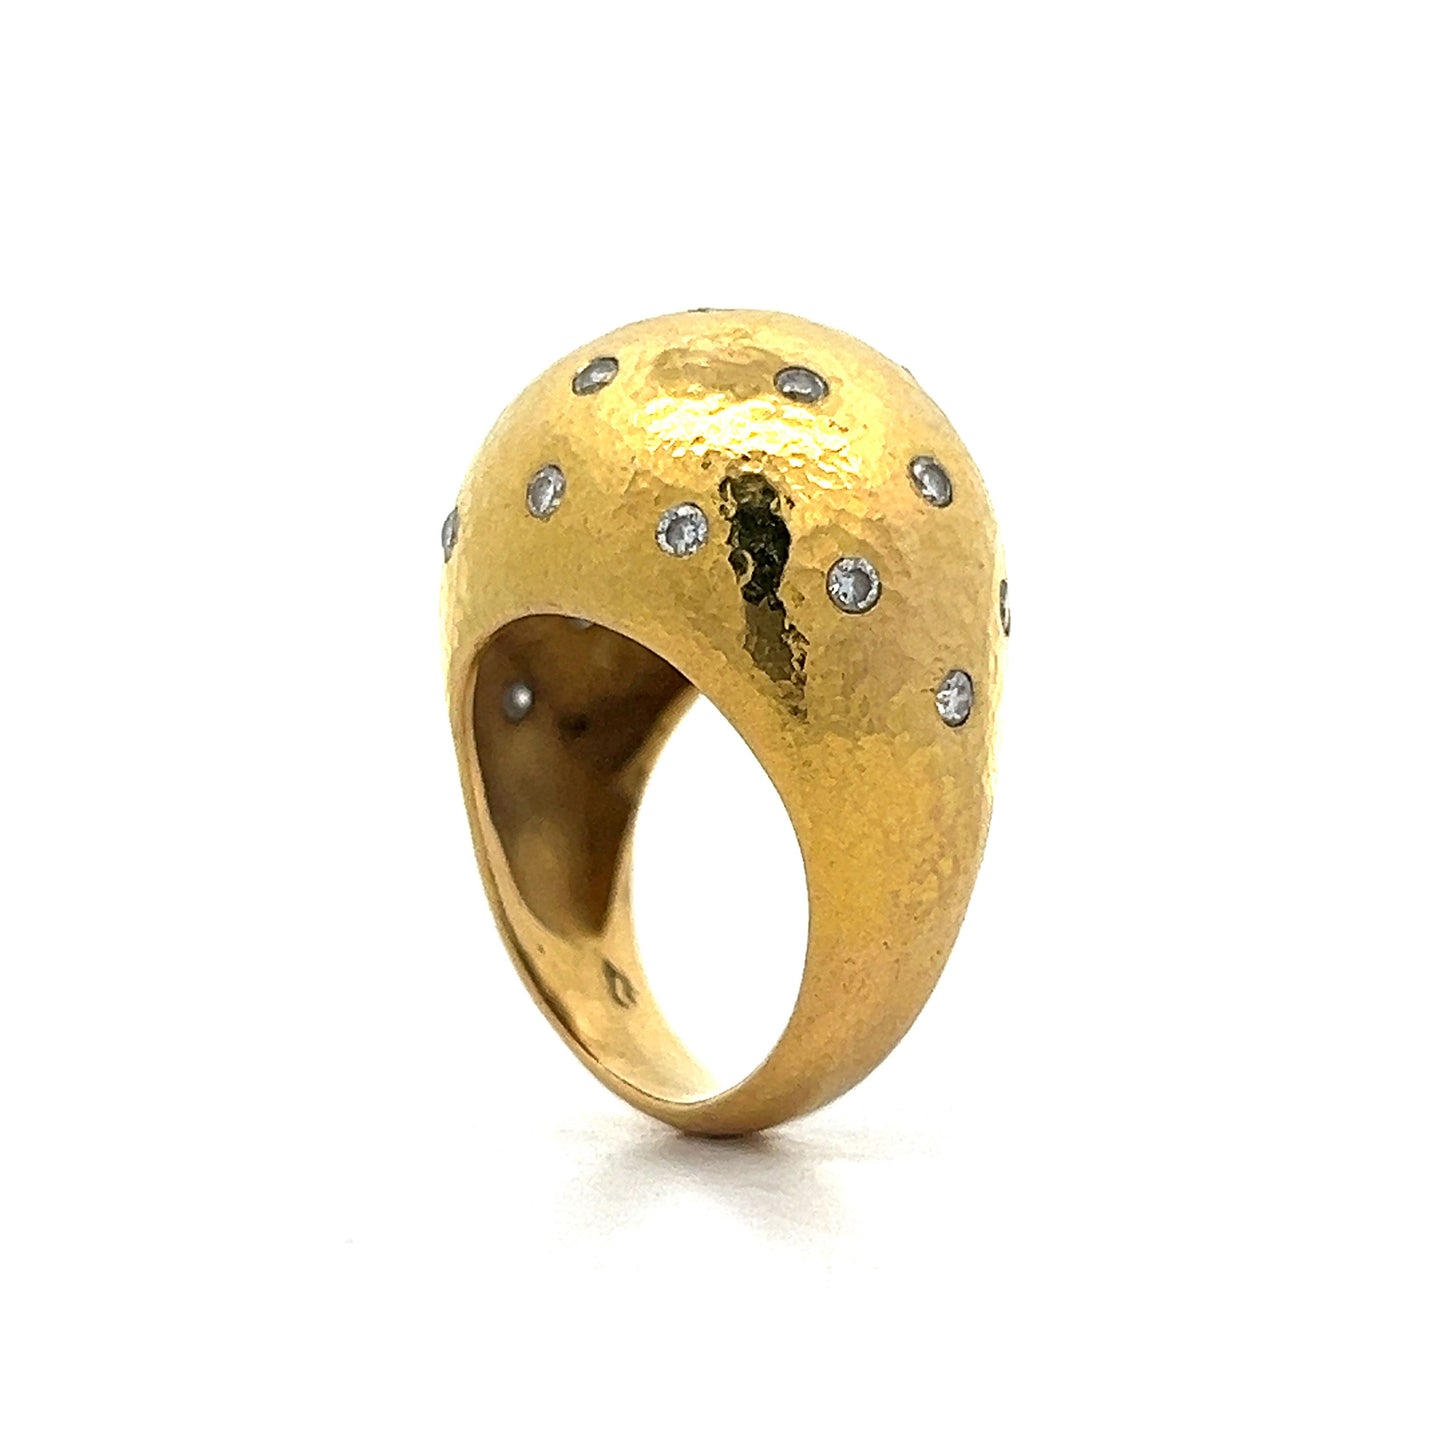 Elizabeth Locke Diamond Dome Ring in 19k Yellow Gold